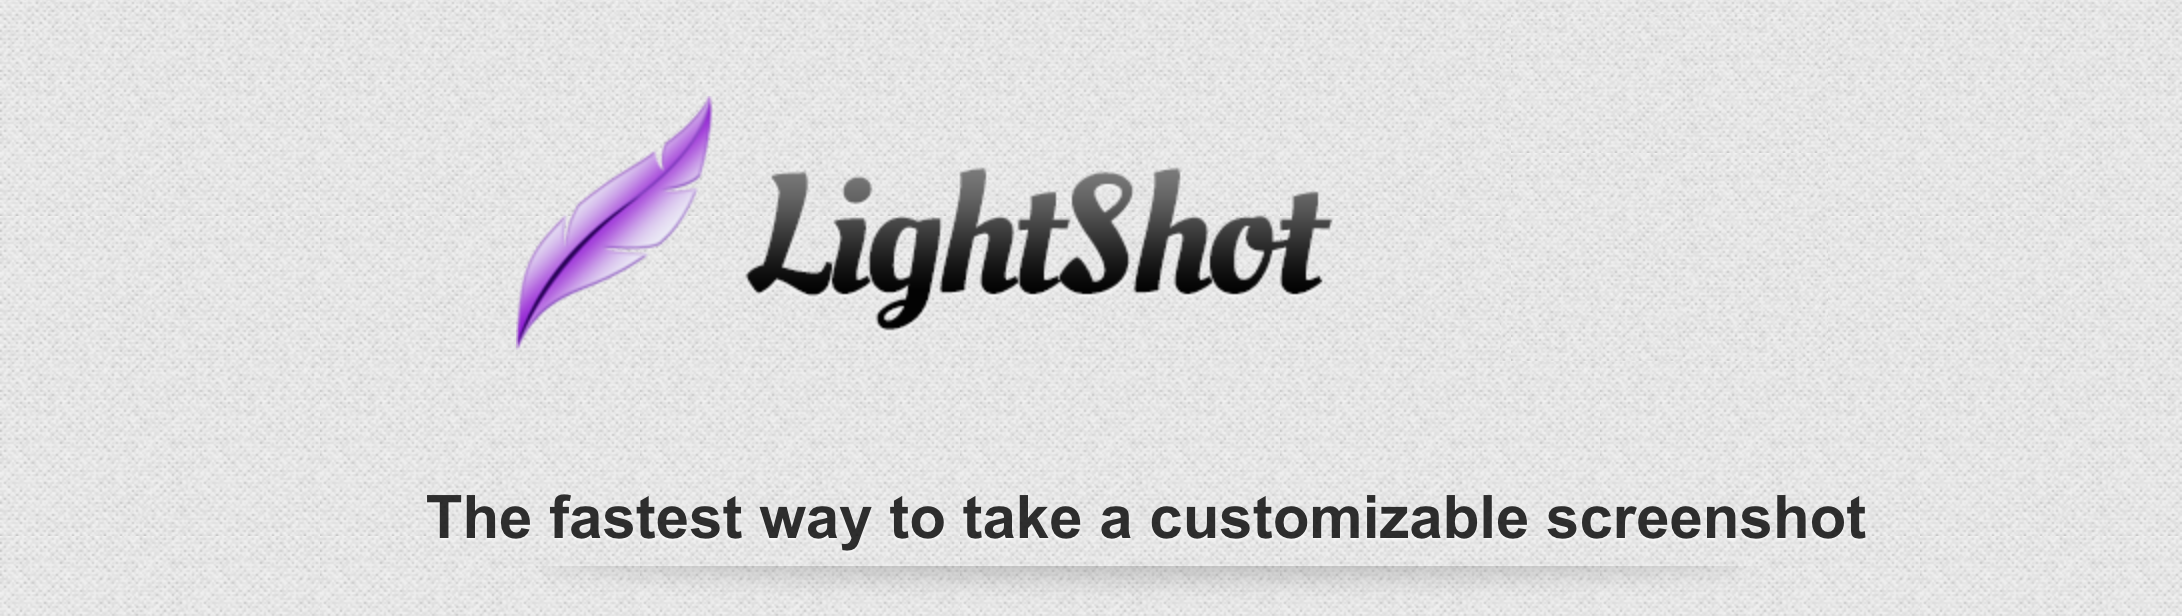 Lightshot. Lightshot логотип. Lightshot ярлык. Программа Lightshot. Https a9fm github io lightshot вот ссылка